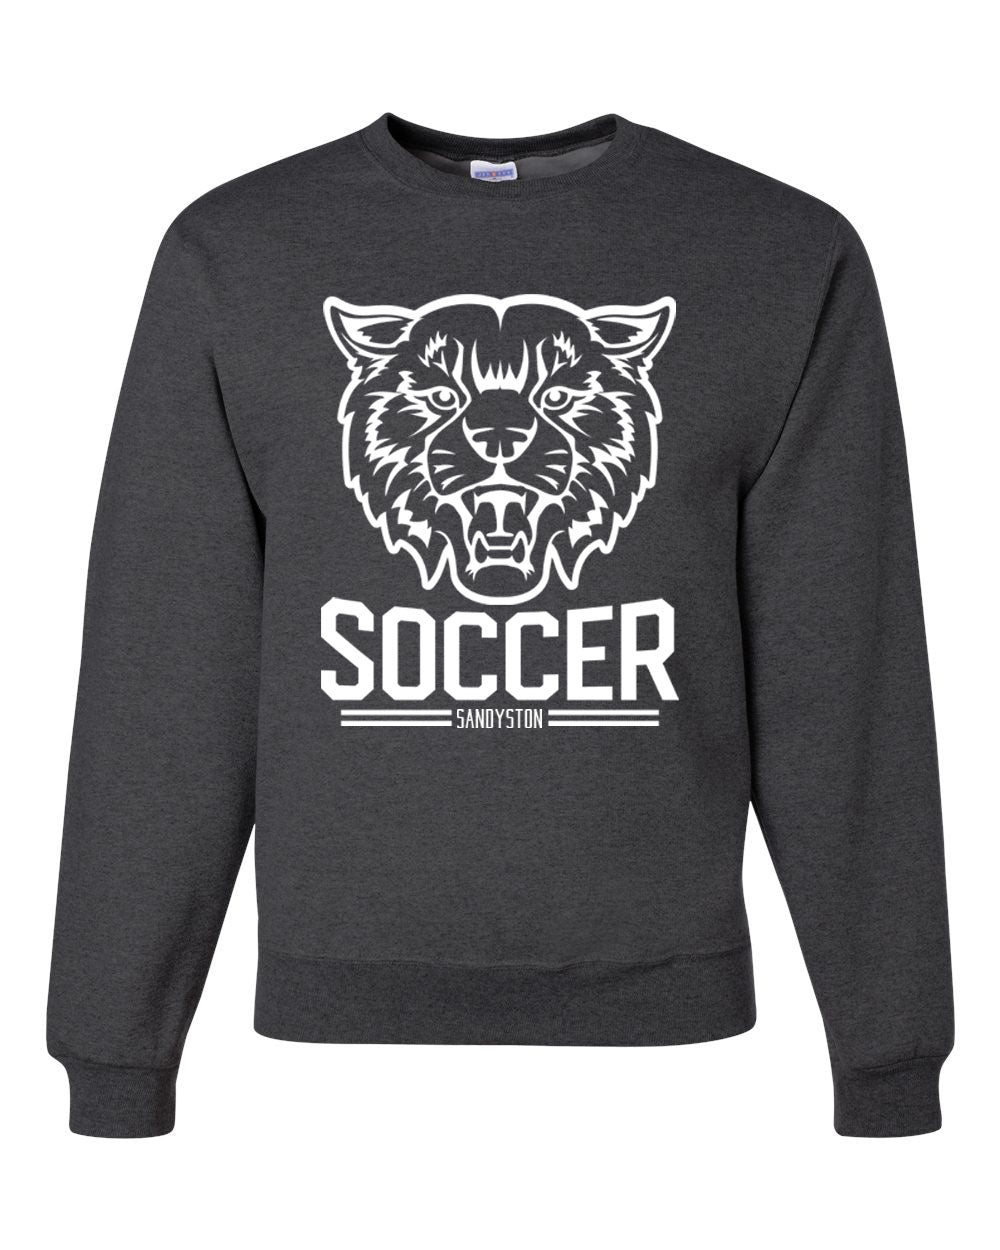 Sandyston Soccer Design 5 non hooded sweatshirt